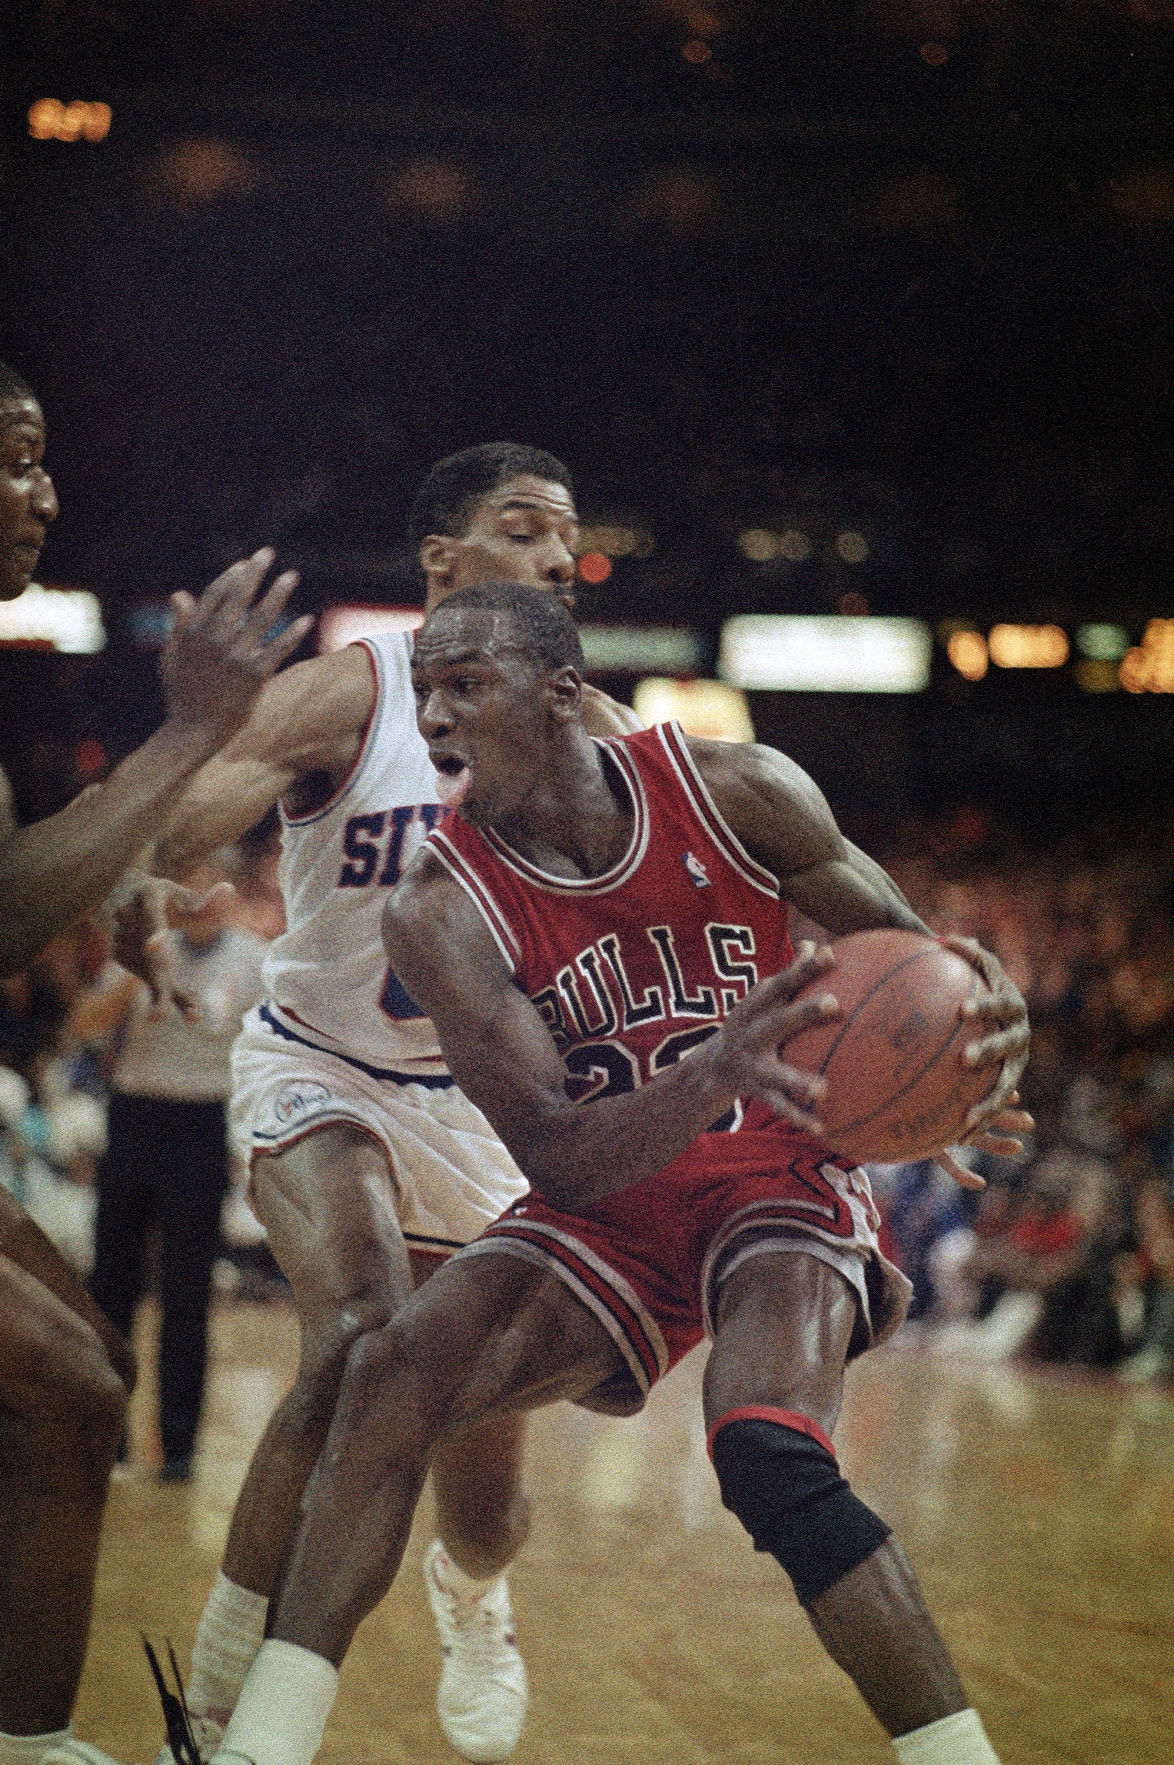 All Star Champions Jordan, Bird,,Iverson, McGrady Mens NBA Jersey.1988.  Size 60.